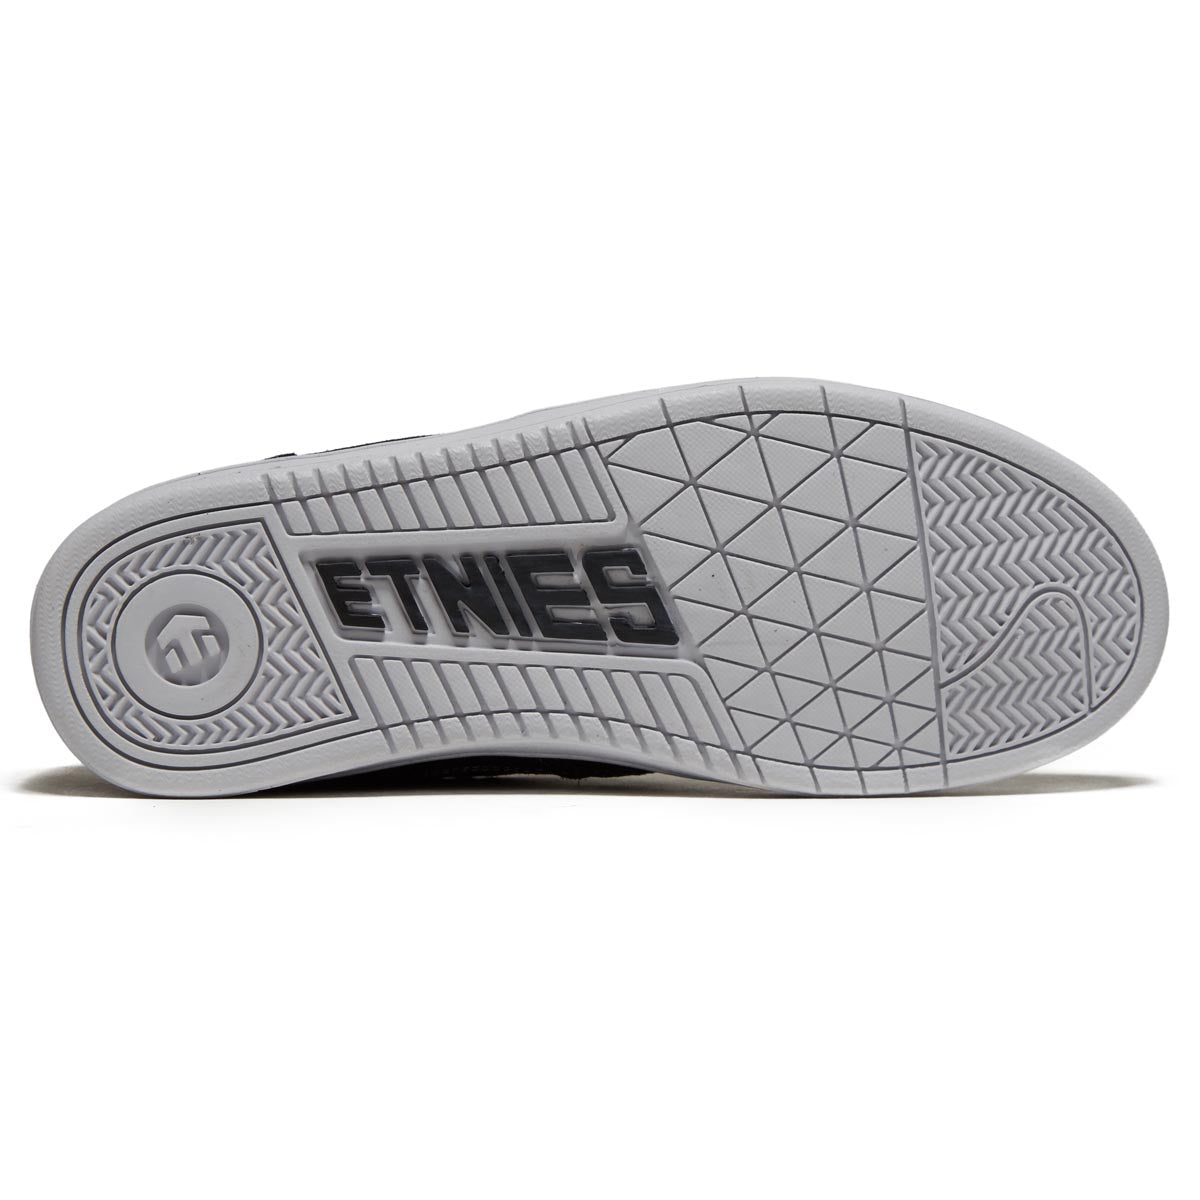 Etnies Snake Shoes - Black/White image 4